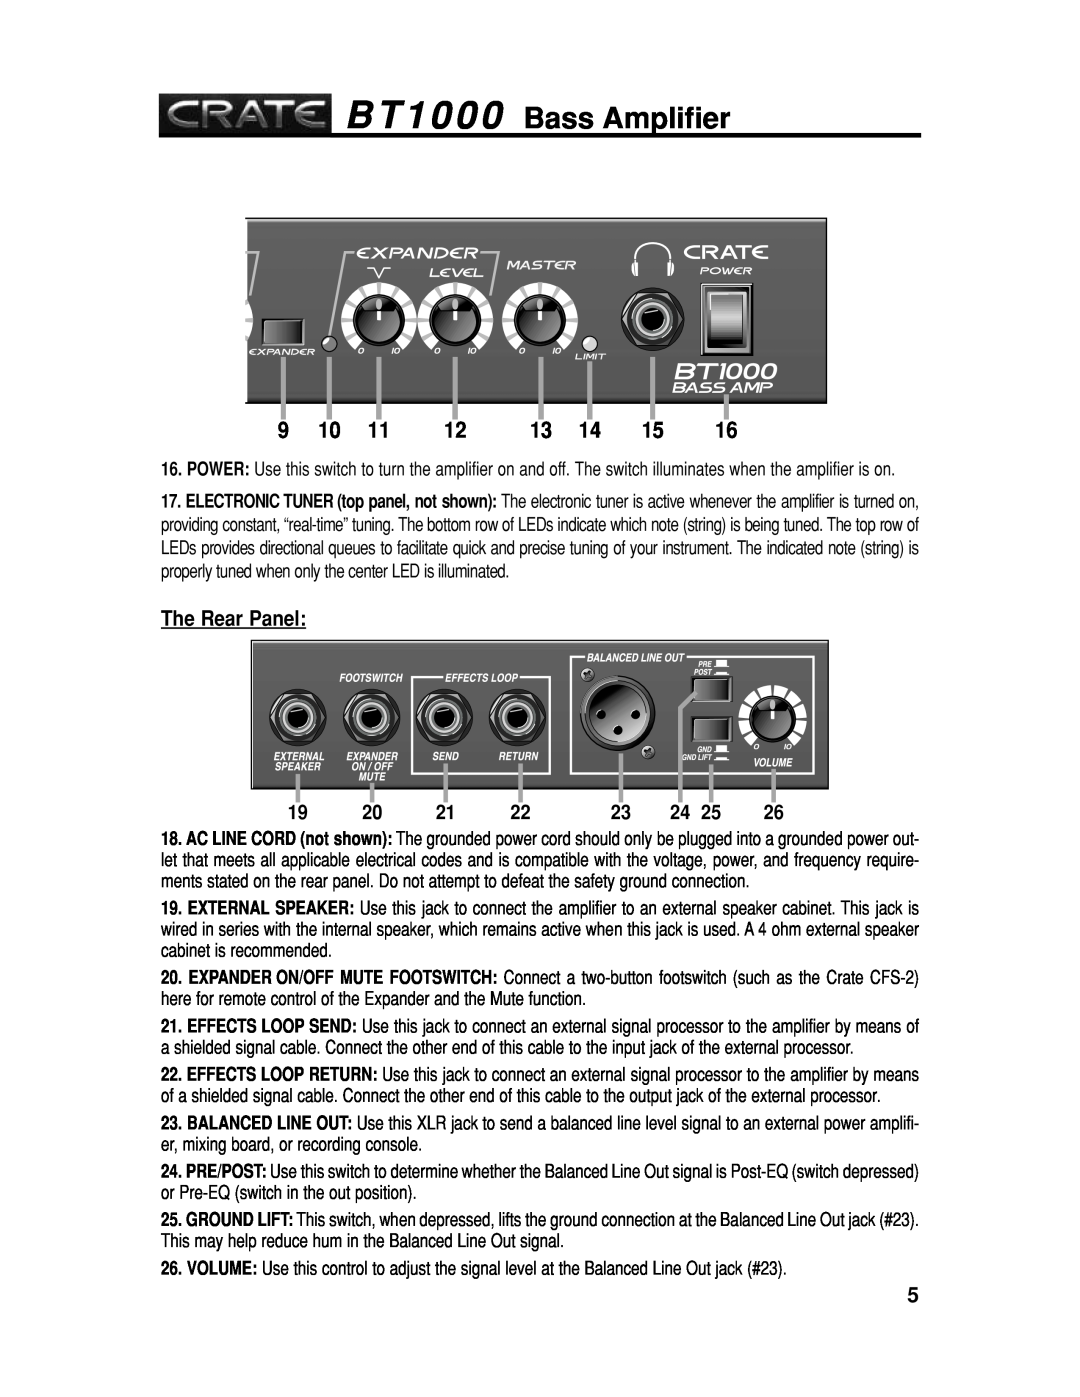 Crate Amplifiers BT1000 manual The Rear Panel, B T 1 0 0 0 Bass Amplifier 